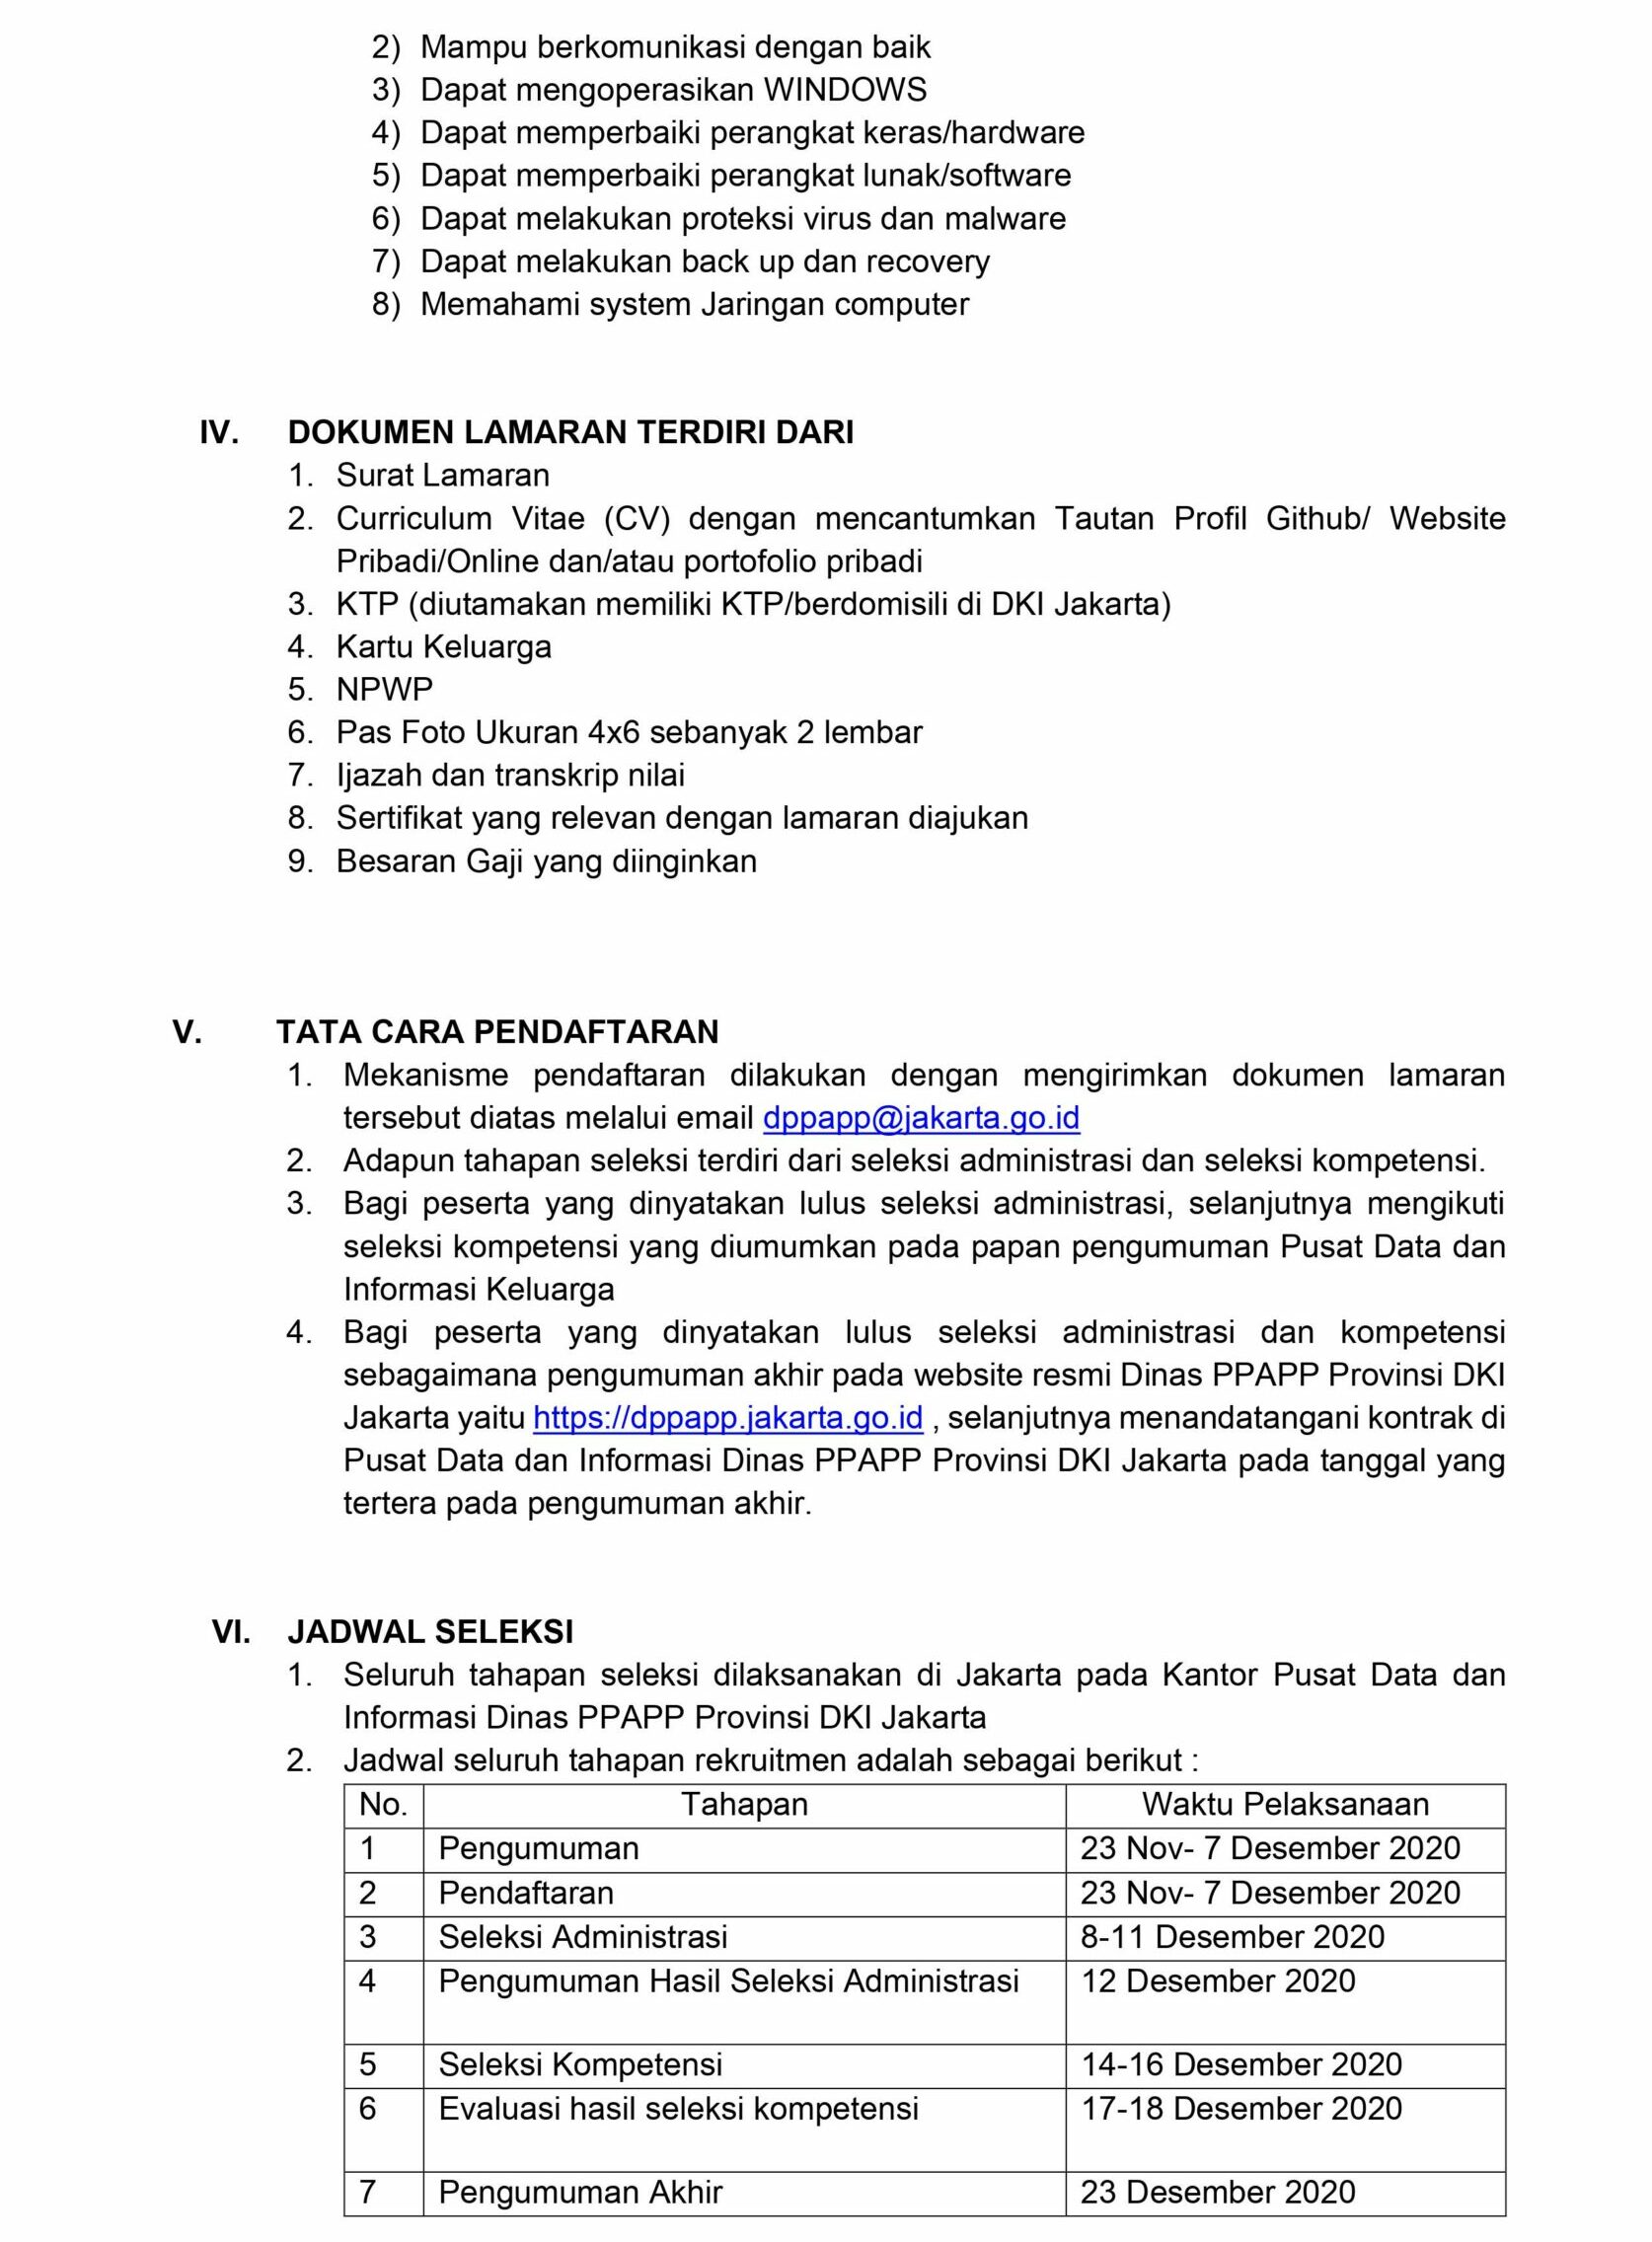 Dinas PPAP Provinsi DKI Jakarta